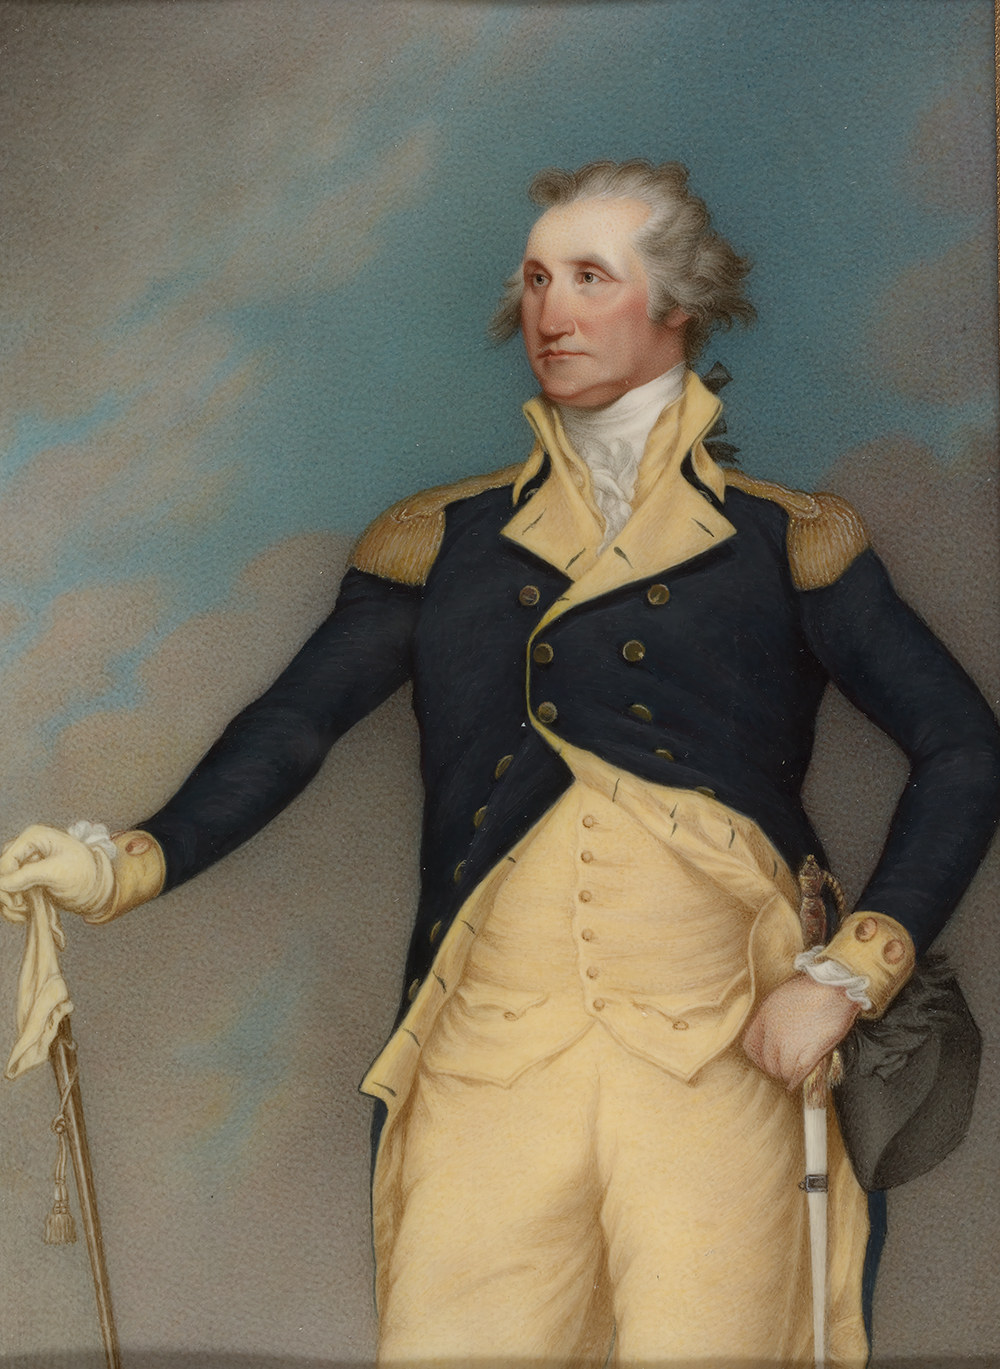 General George Washington, by Henry Brintnell Bounetheau, after John Trumbull, c. 1845. Smithsonian American Art Museum, Gift of Mrs. Henry Du Pré Bounetheau.